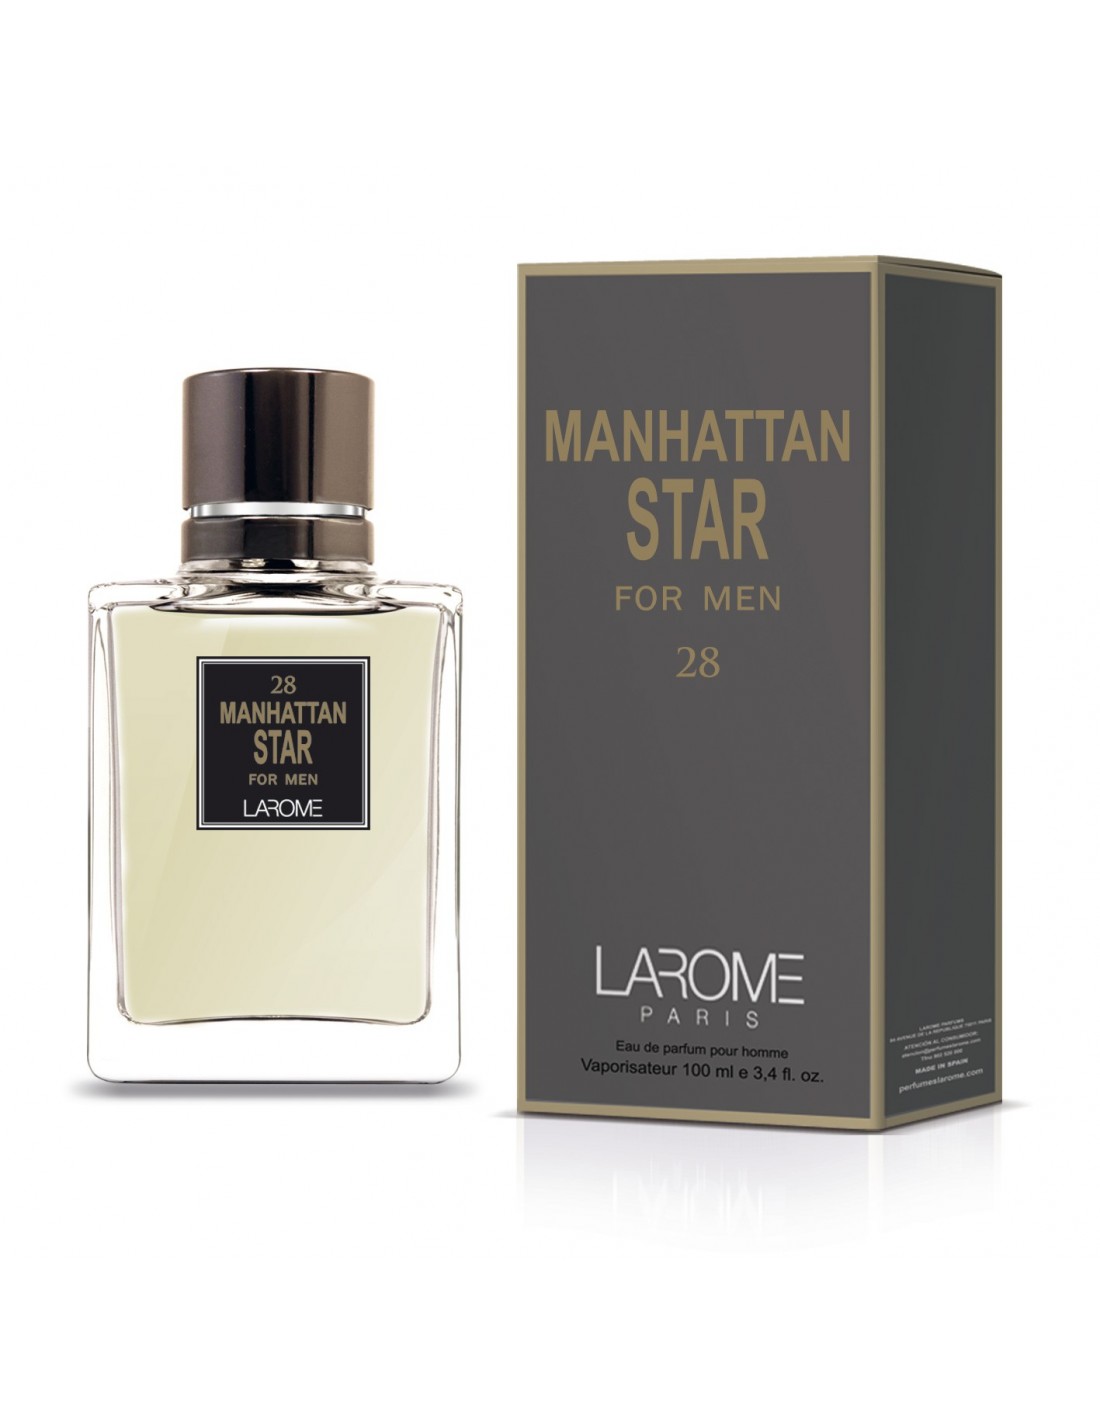 ▷ MANHATTAN STAR FOR MEN by LAROME ✶ Perfume for man Size 100ml